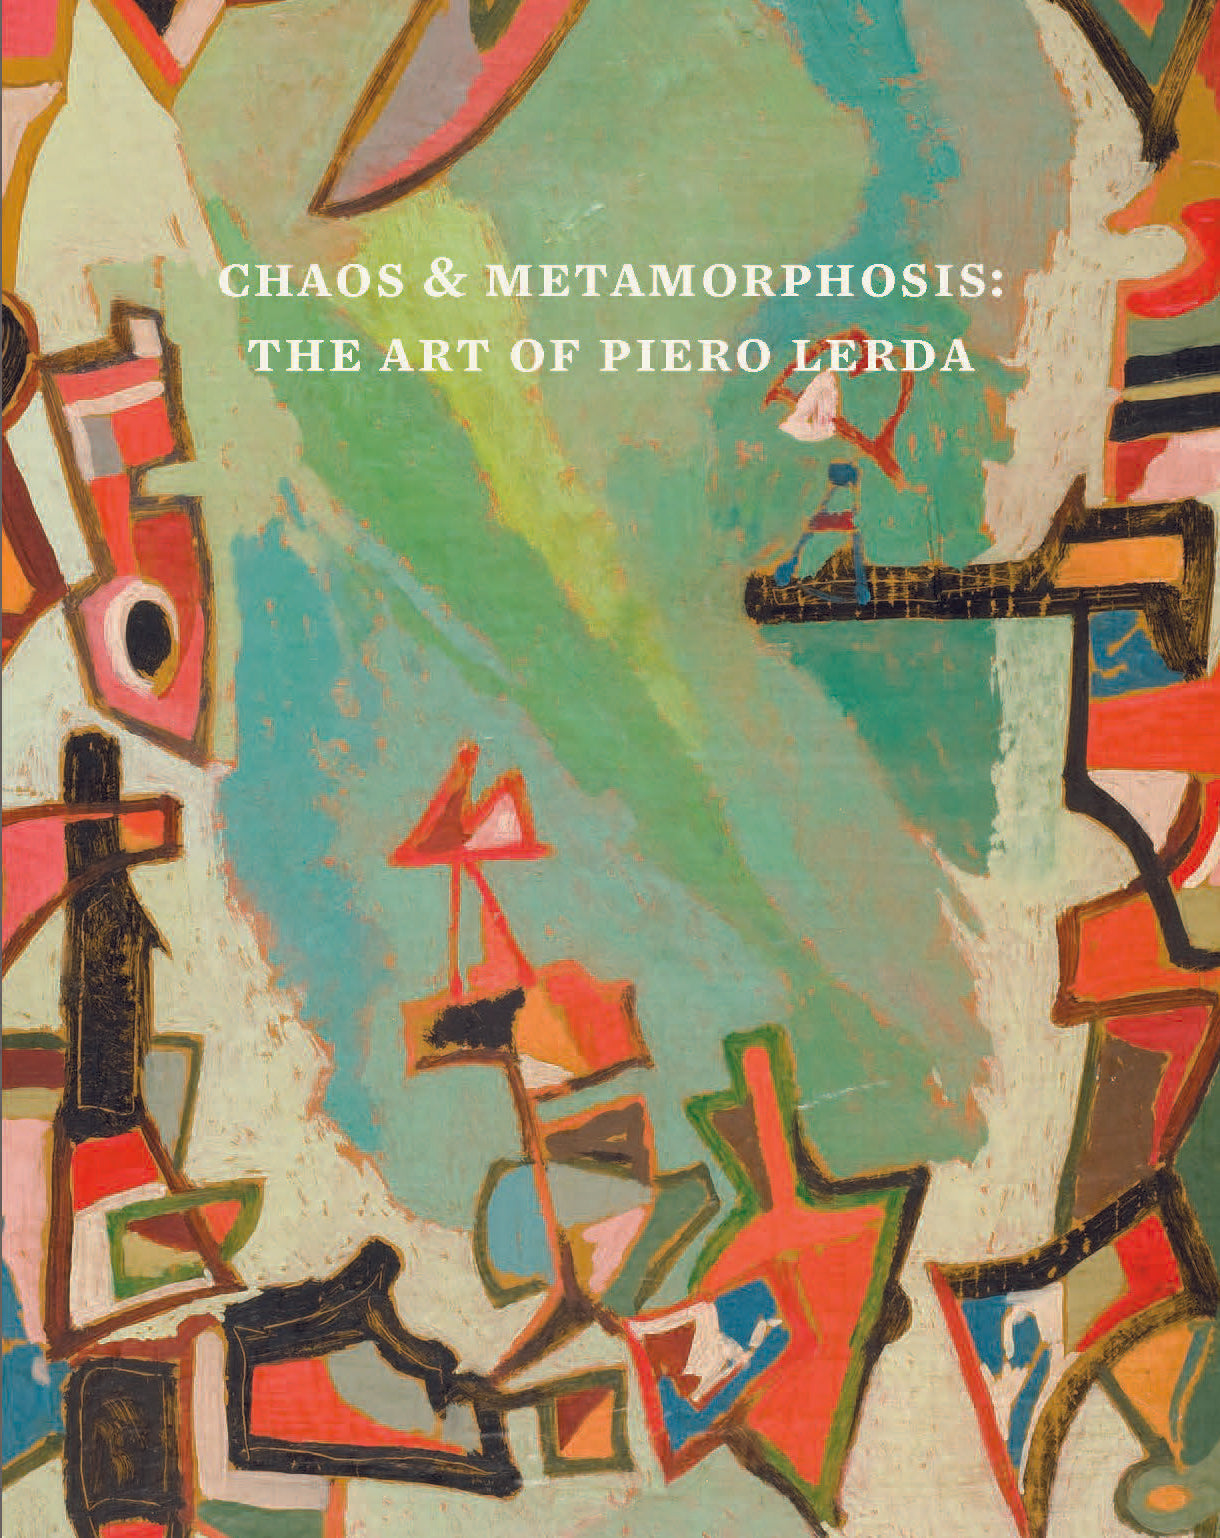 Chaos & Metamorphosis: The Art of Piero Lerda